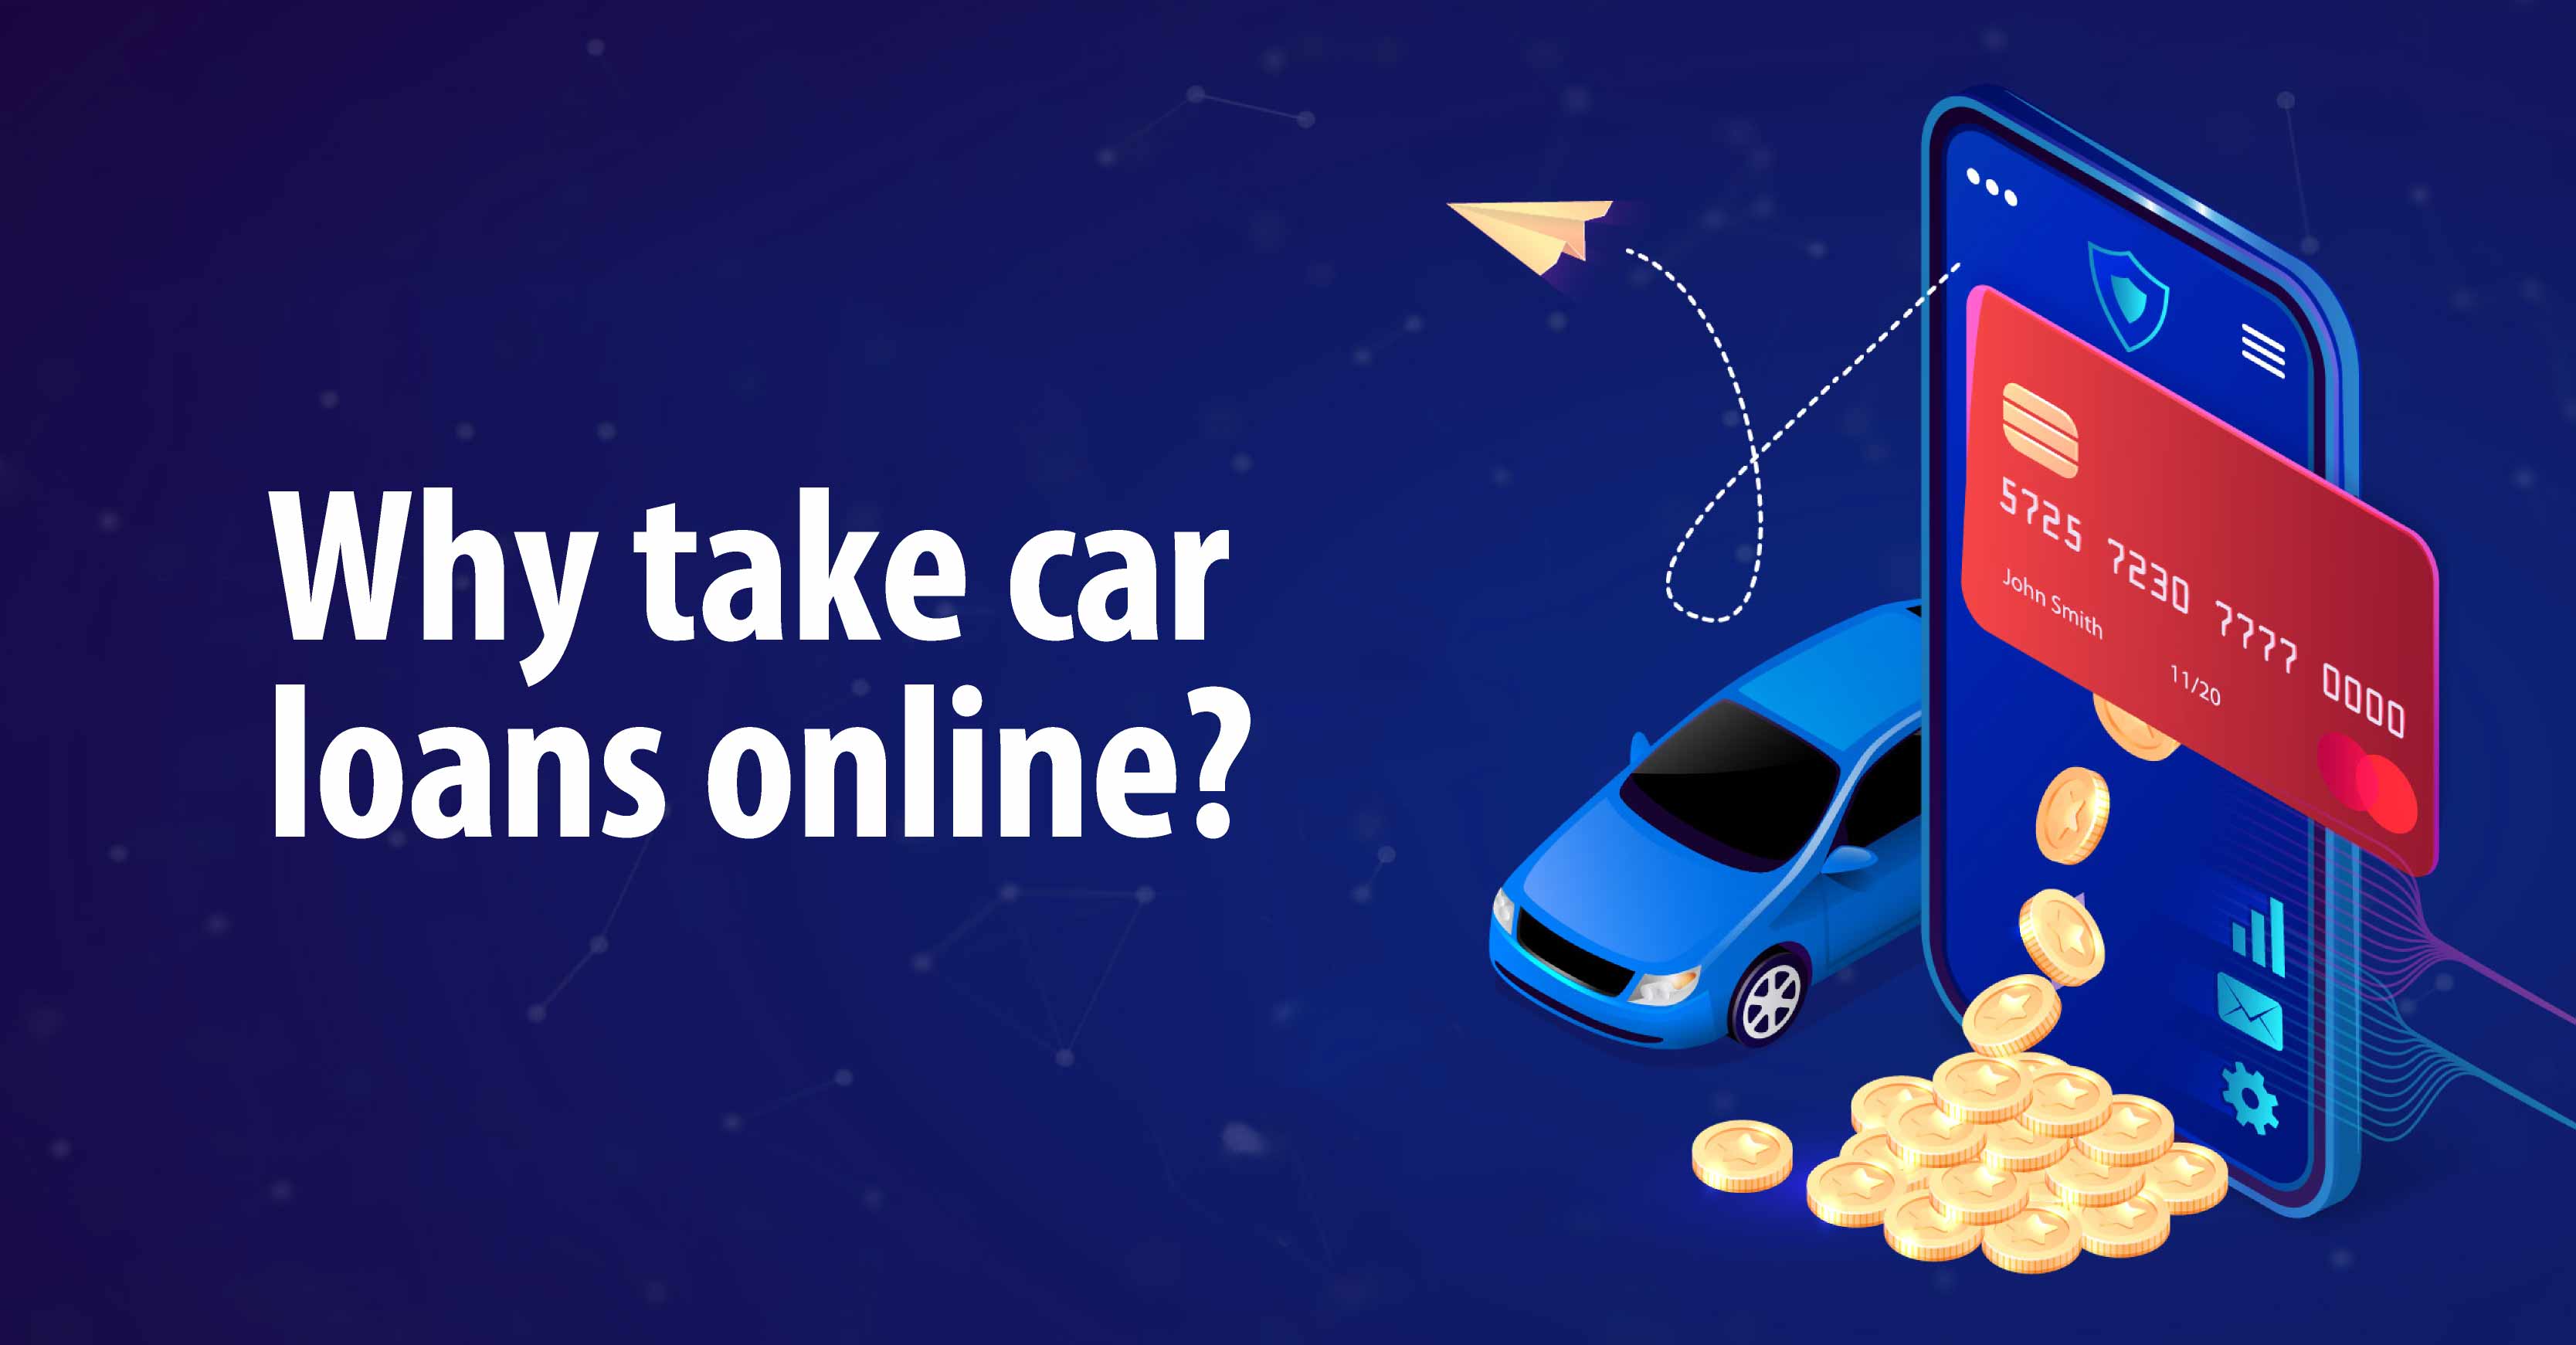 Why take car loans online?